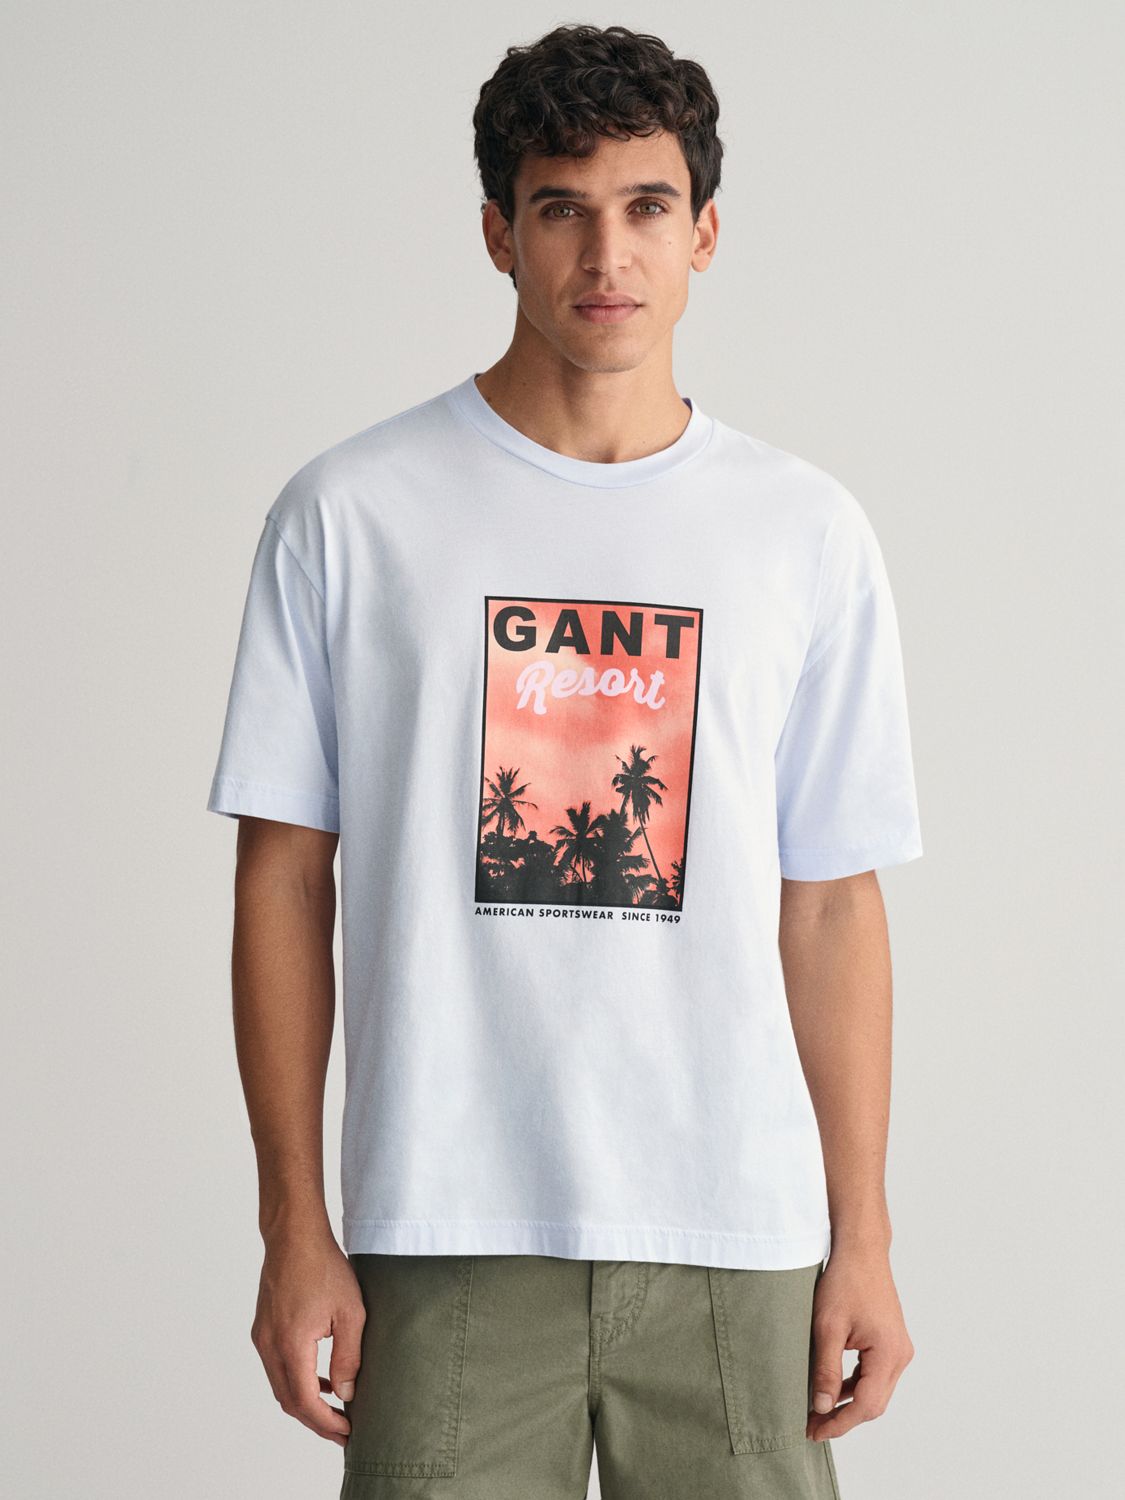 GANT Washed Graphic Short Sleeve T-Shirt, Light Blue/Multi, S